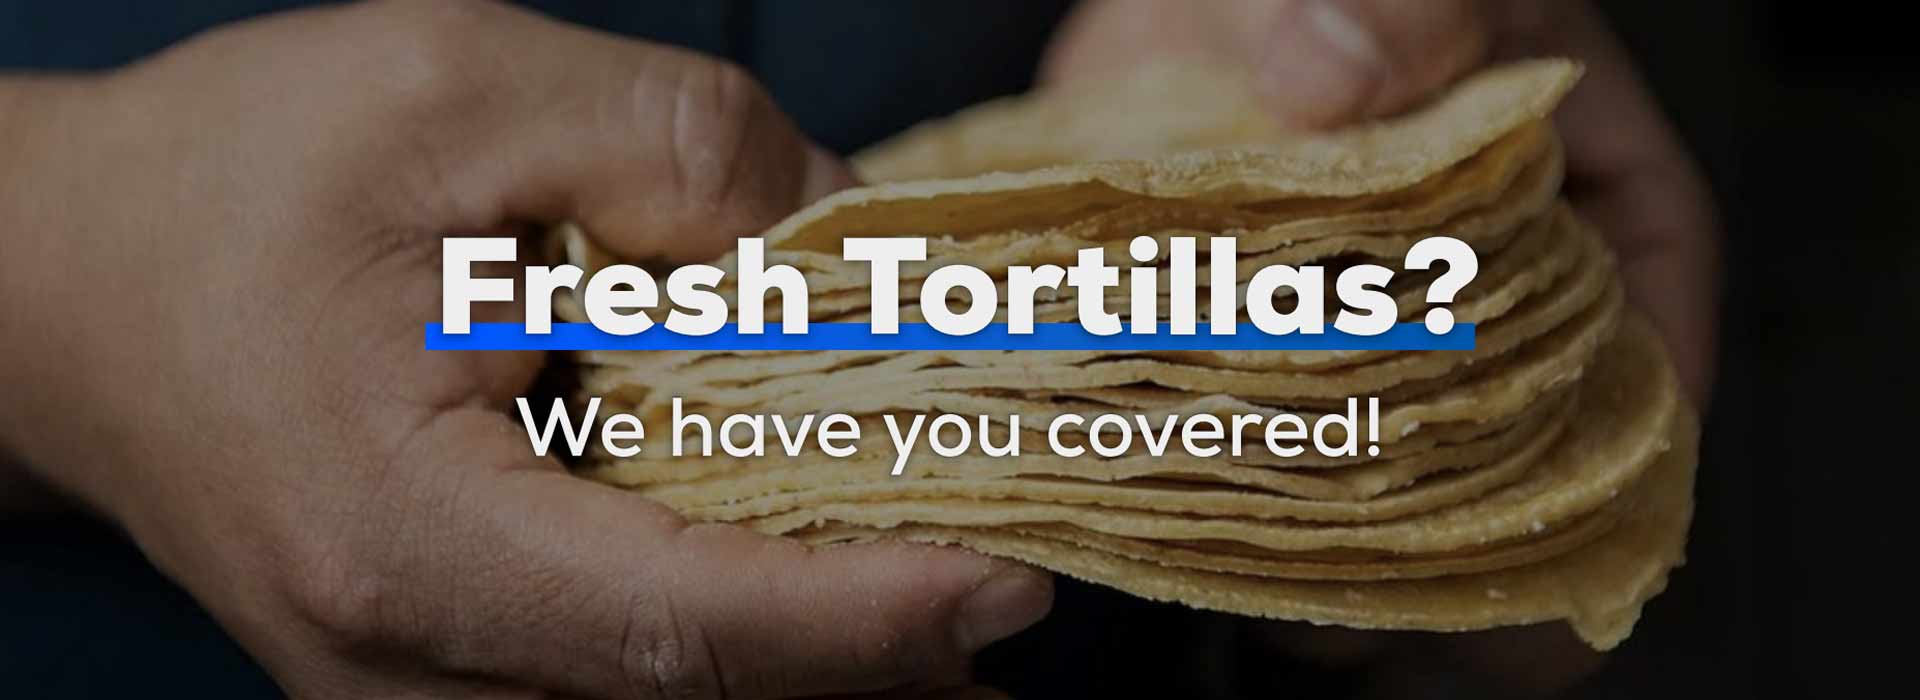 Fresh tortillas graphic